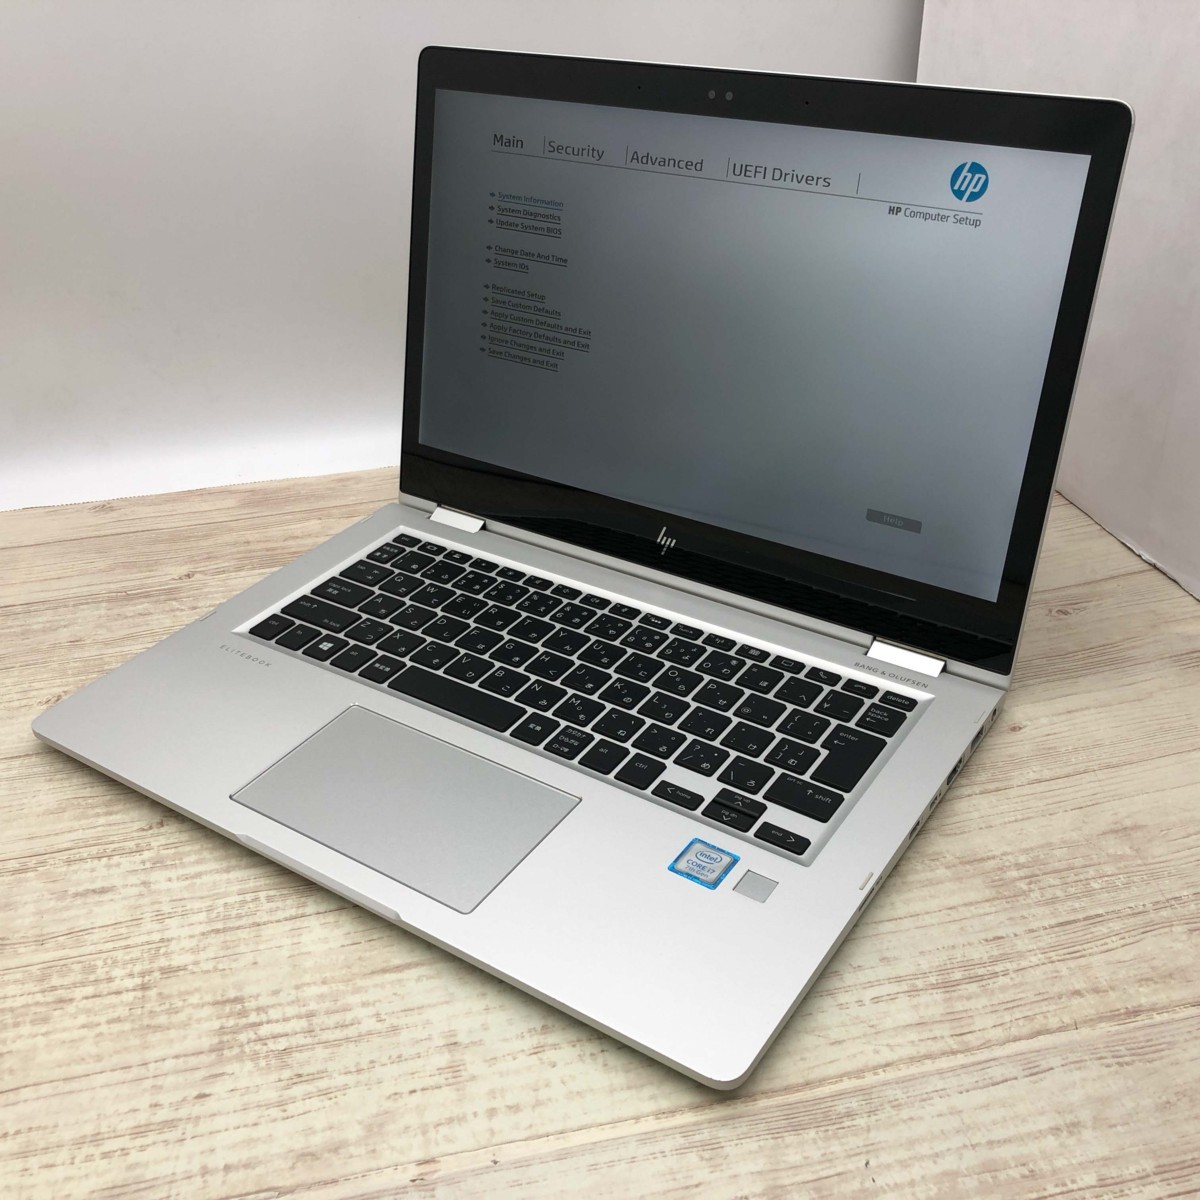 Hewlett-Packard EliteBook x360 1030 G2 Core i7 7600U 2.80GHz/16GB